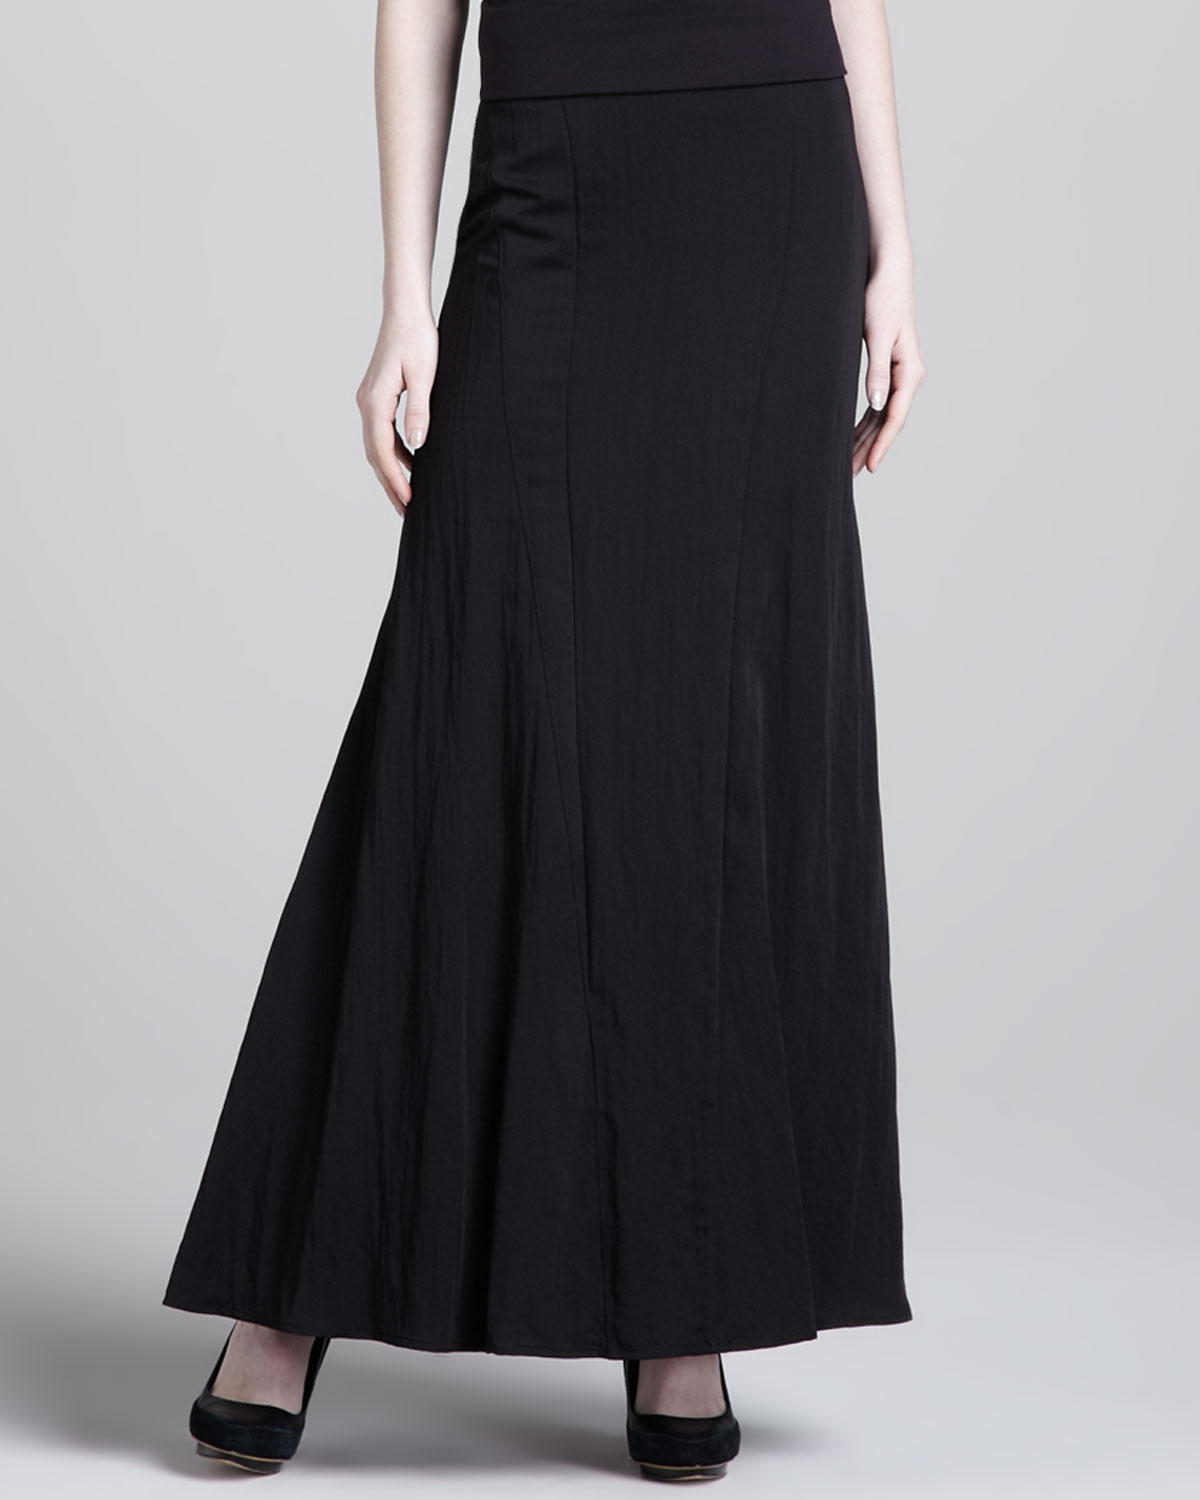 Donna karan Gored Aline Maxi Skirt in Black | Lyst